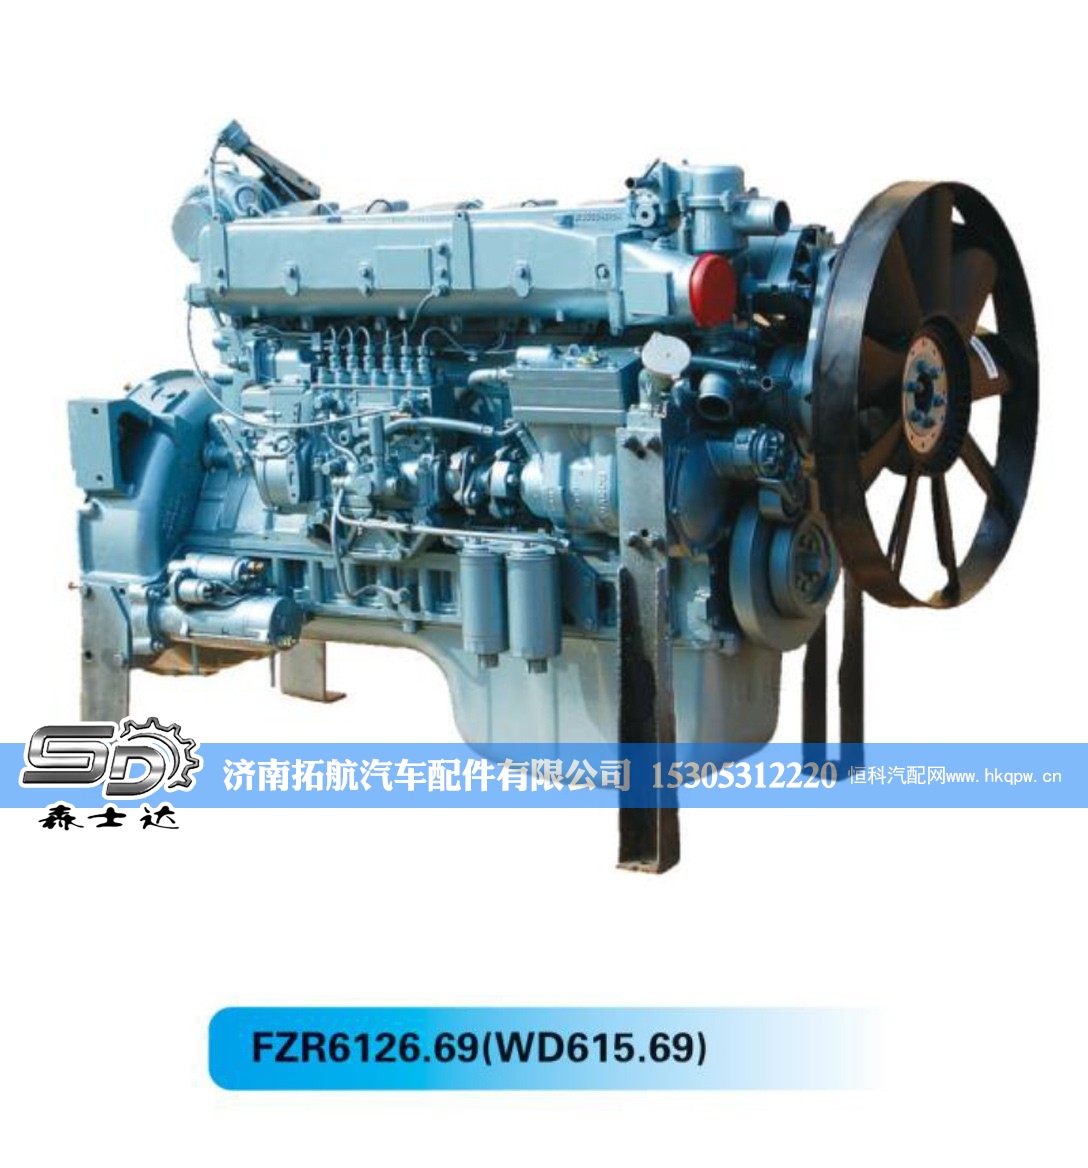 FZR6126.69(WD615.69),FZR6126.69(WD615.69)发动机,济南拓航汽车配件有限公司